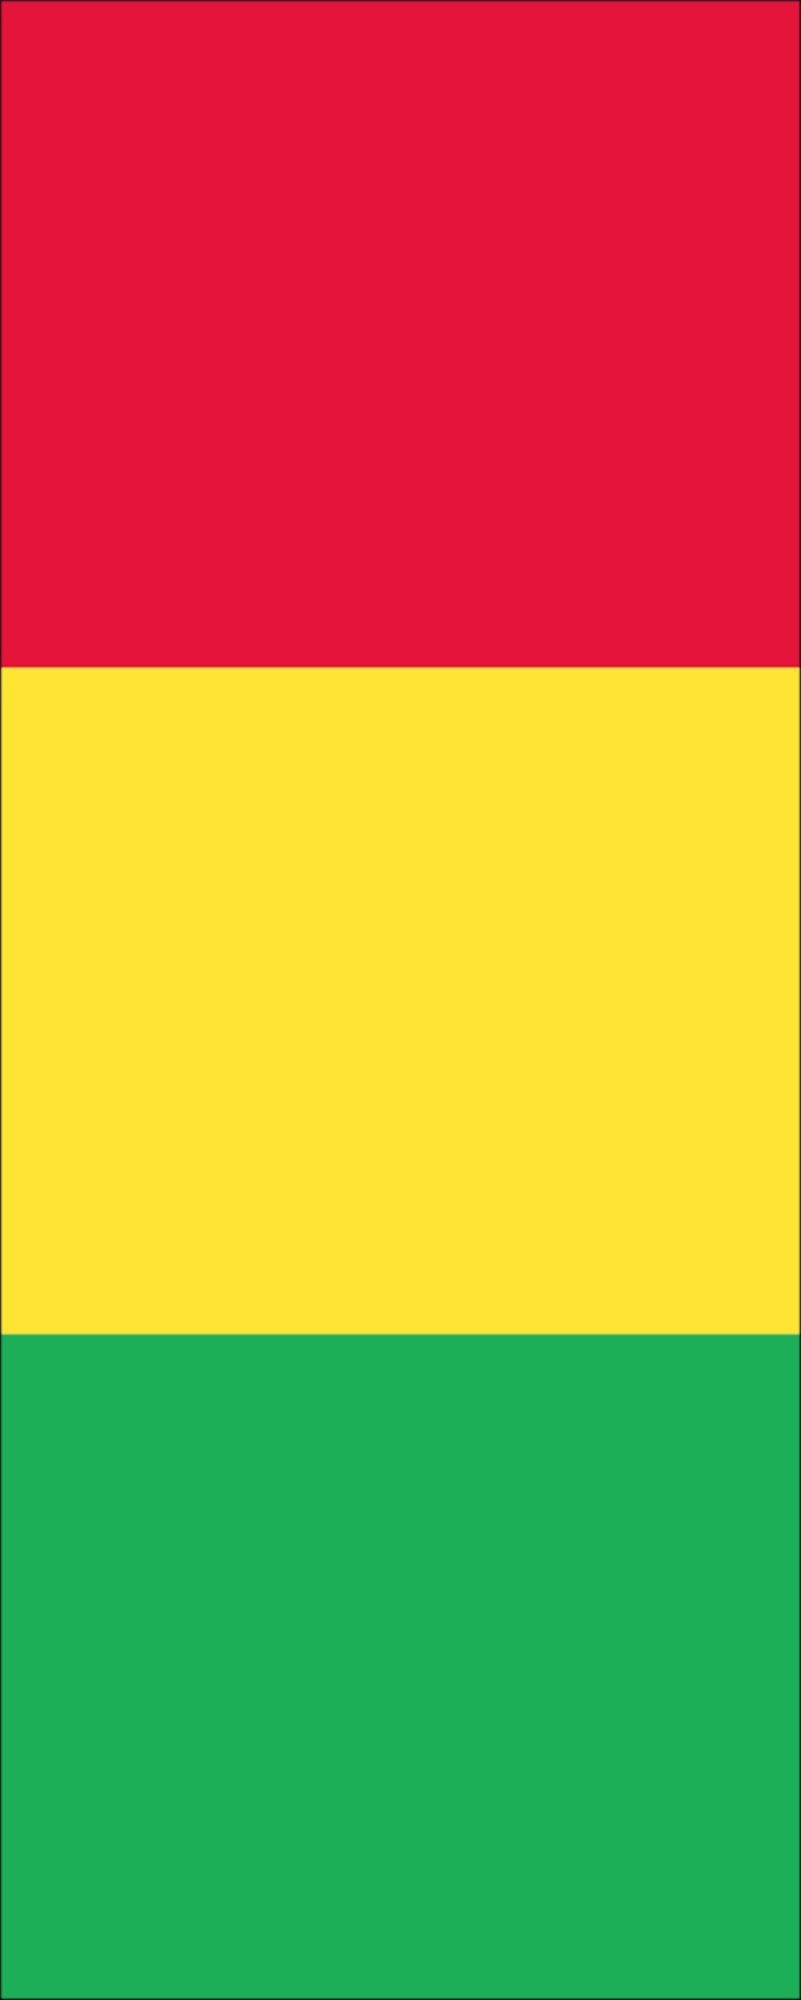 flaggenmeer Flagge Flagge Guinea 110 g/m² Hochformat